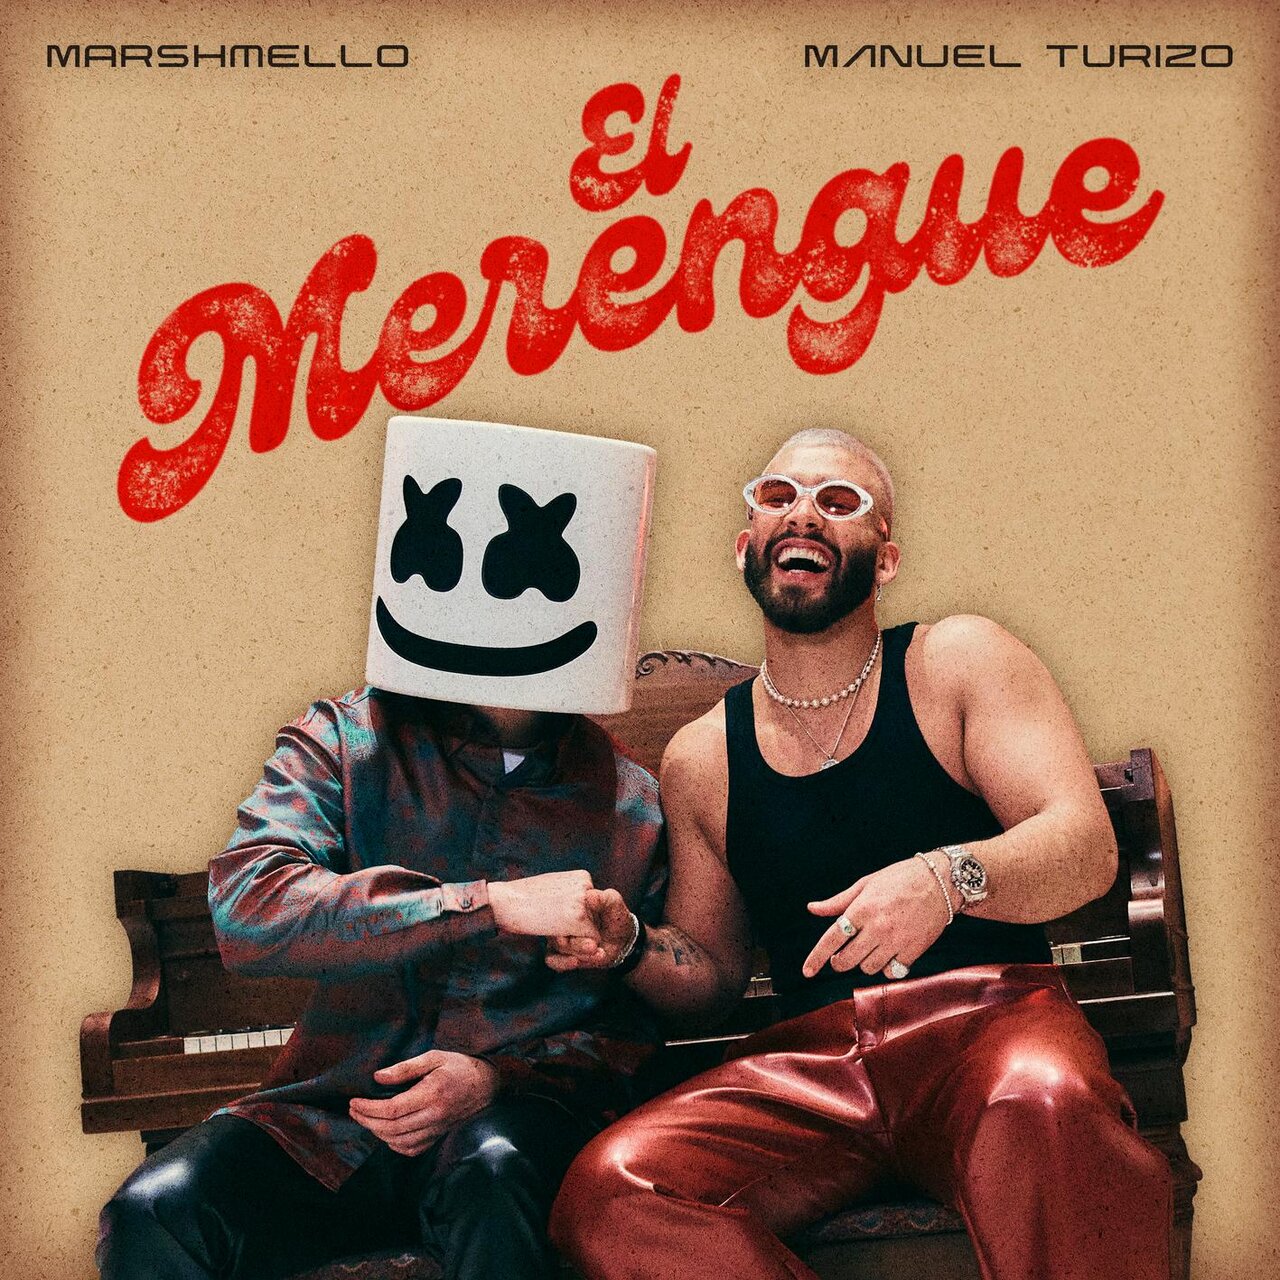 Marshmello - El Merengue (ft. Manuel Turizo) (Cover)